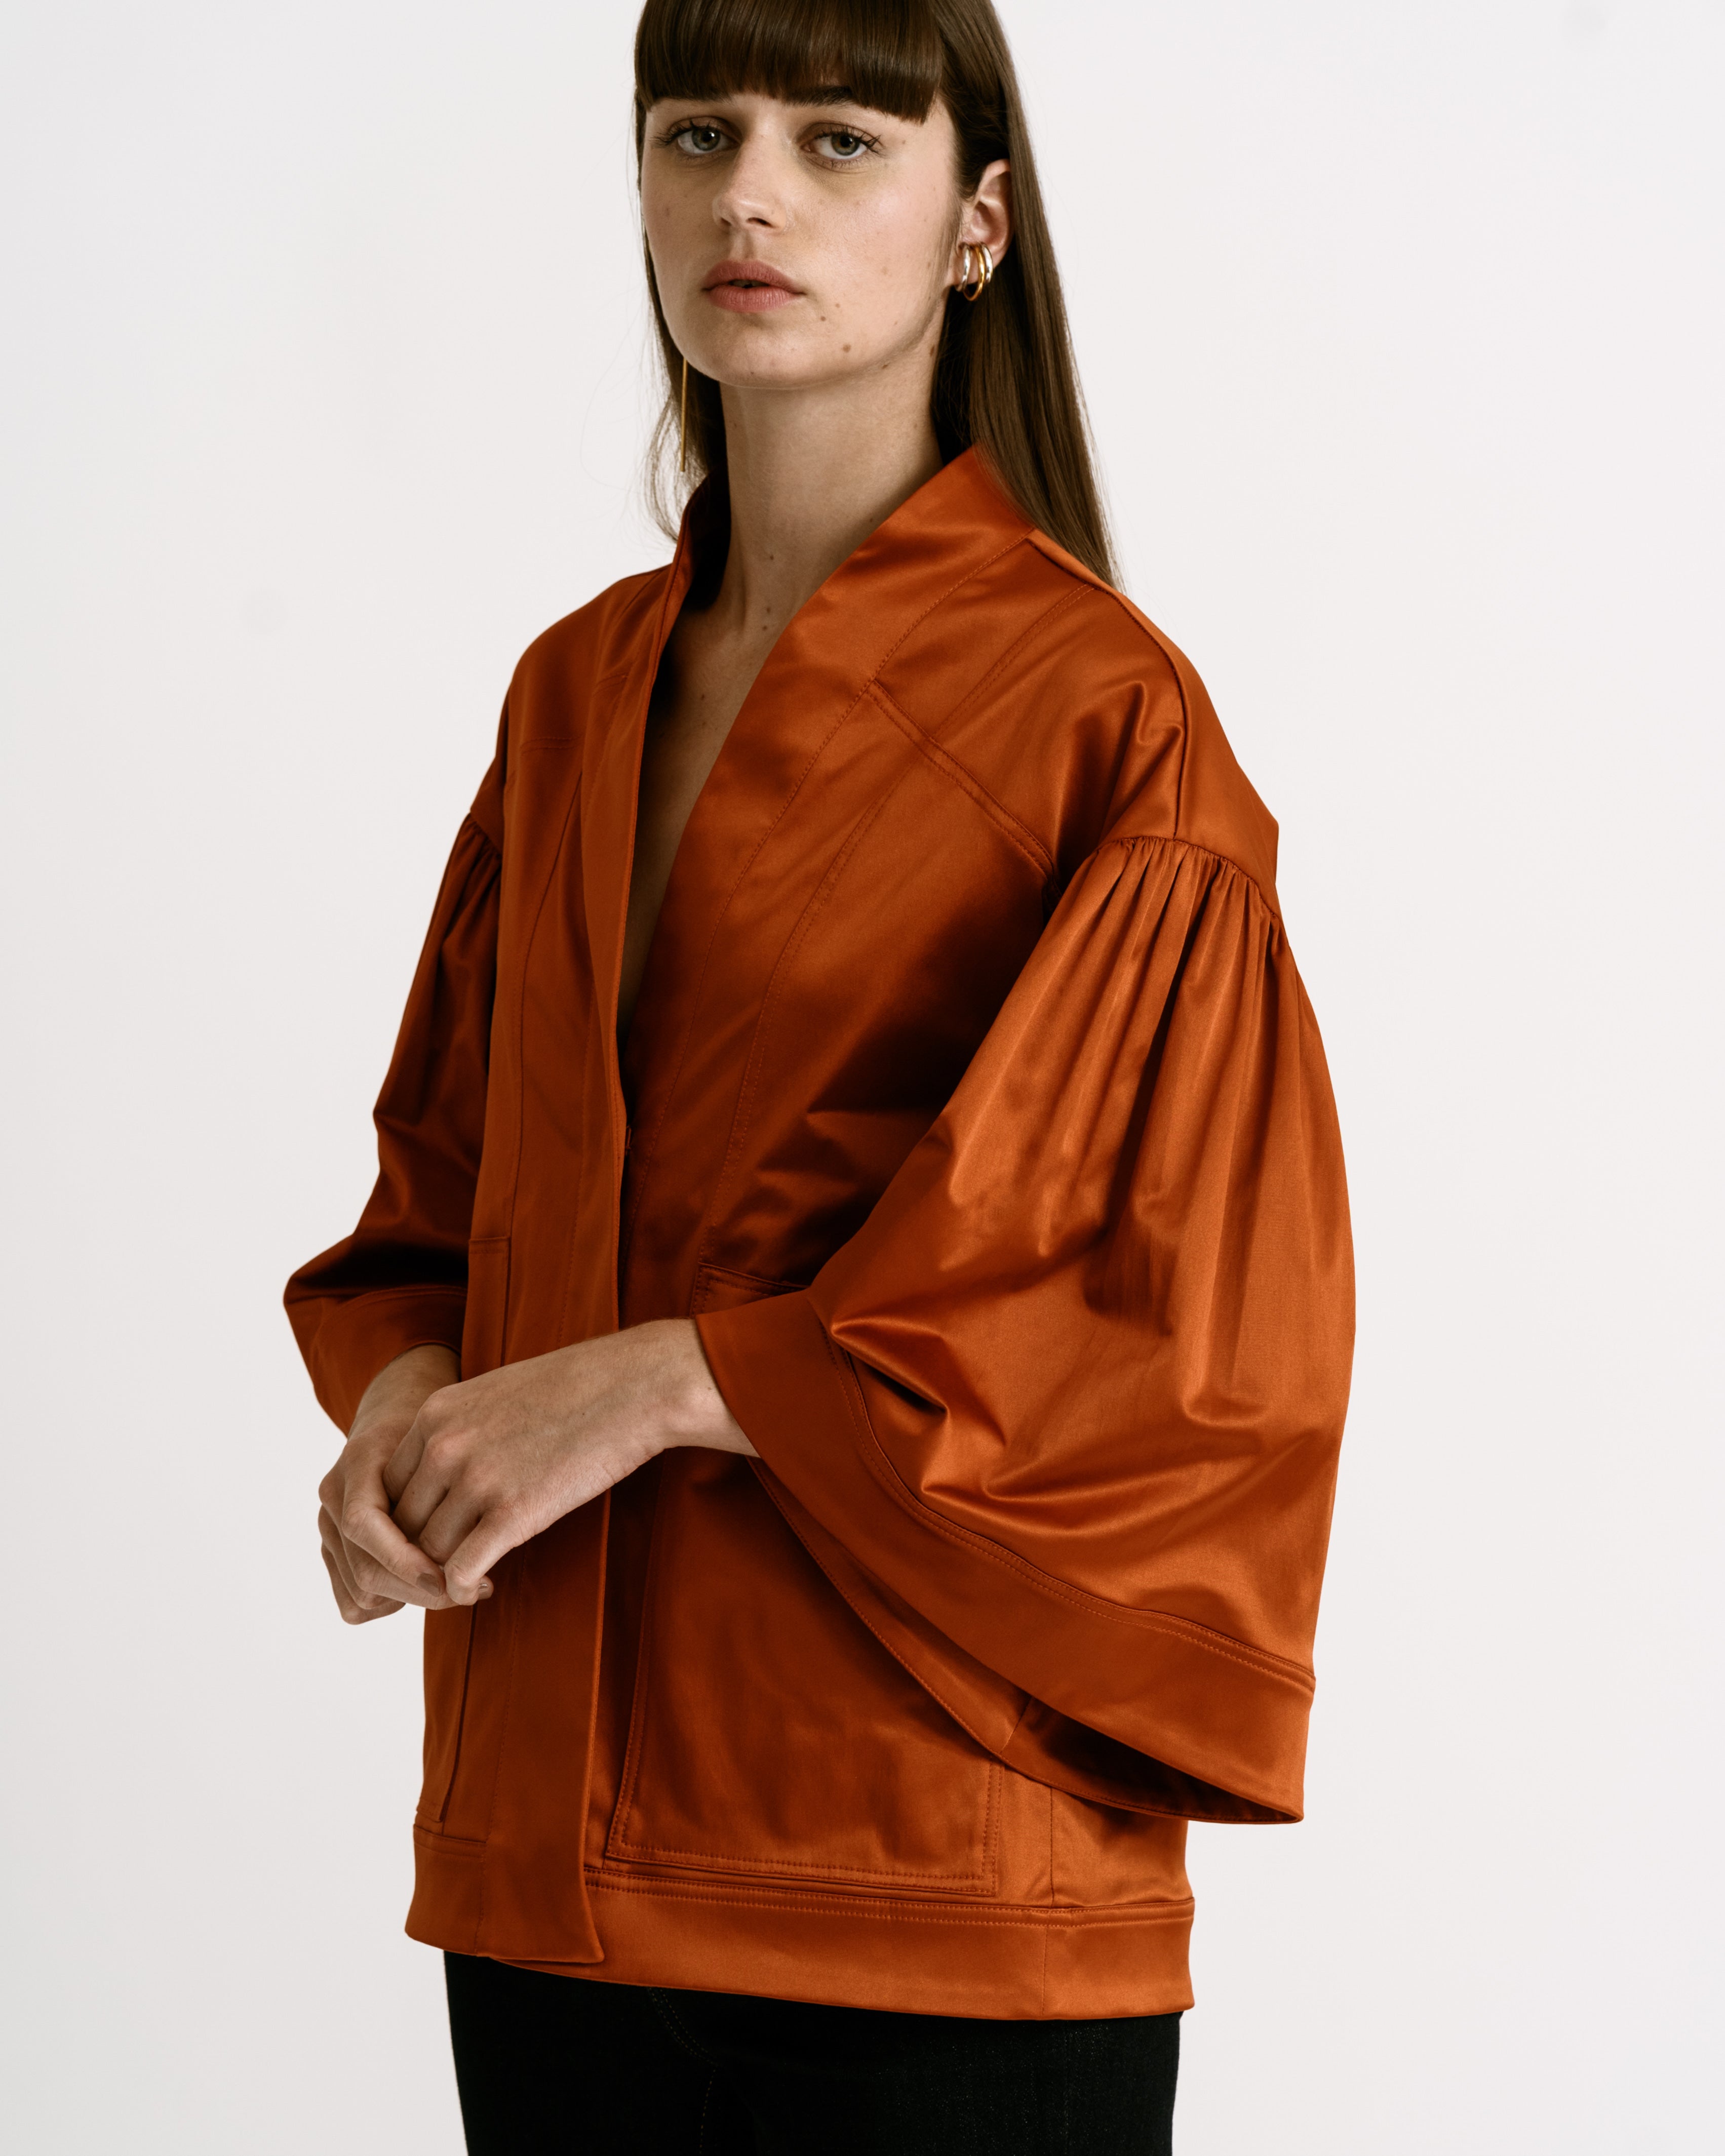 Kimono – franciscocancino.us